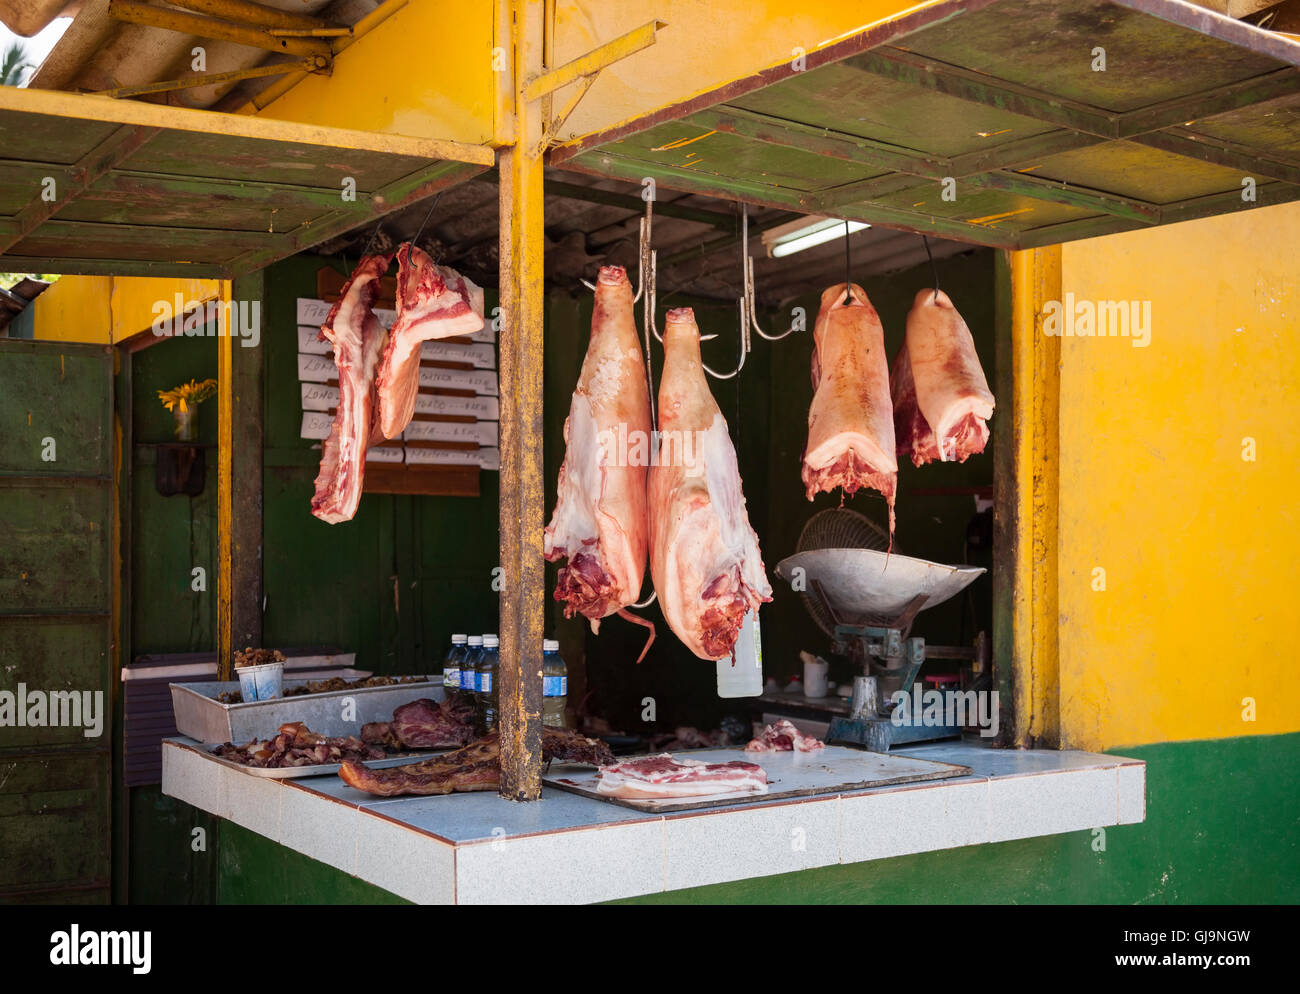 Fresh Meat Hang on Spike in Asain Market. Stock Photo - Image of loin,  roast: 67932000